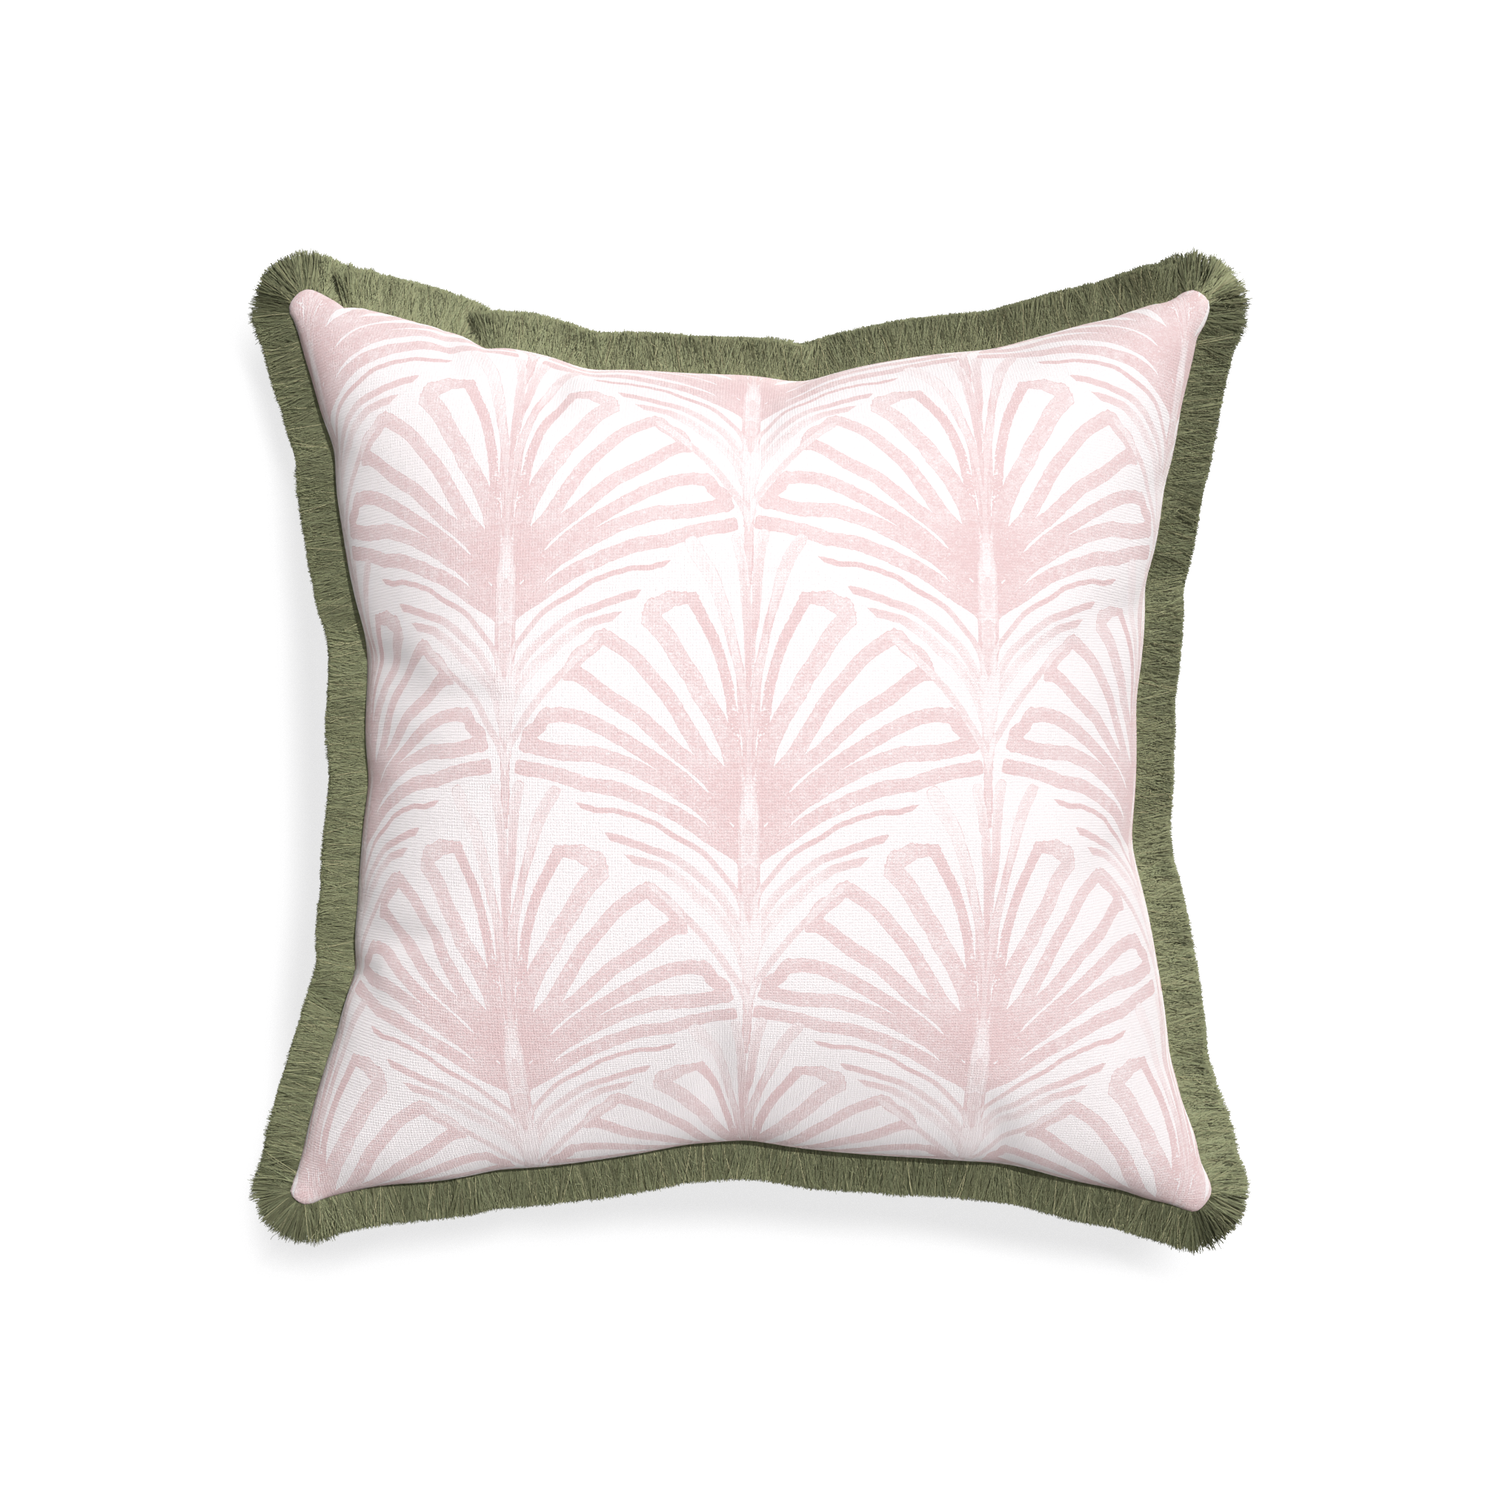 20-square suzy rose custom pillow with sage fringe on white background